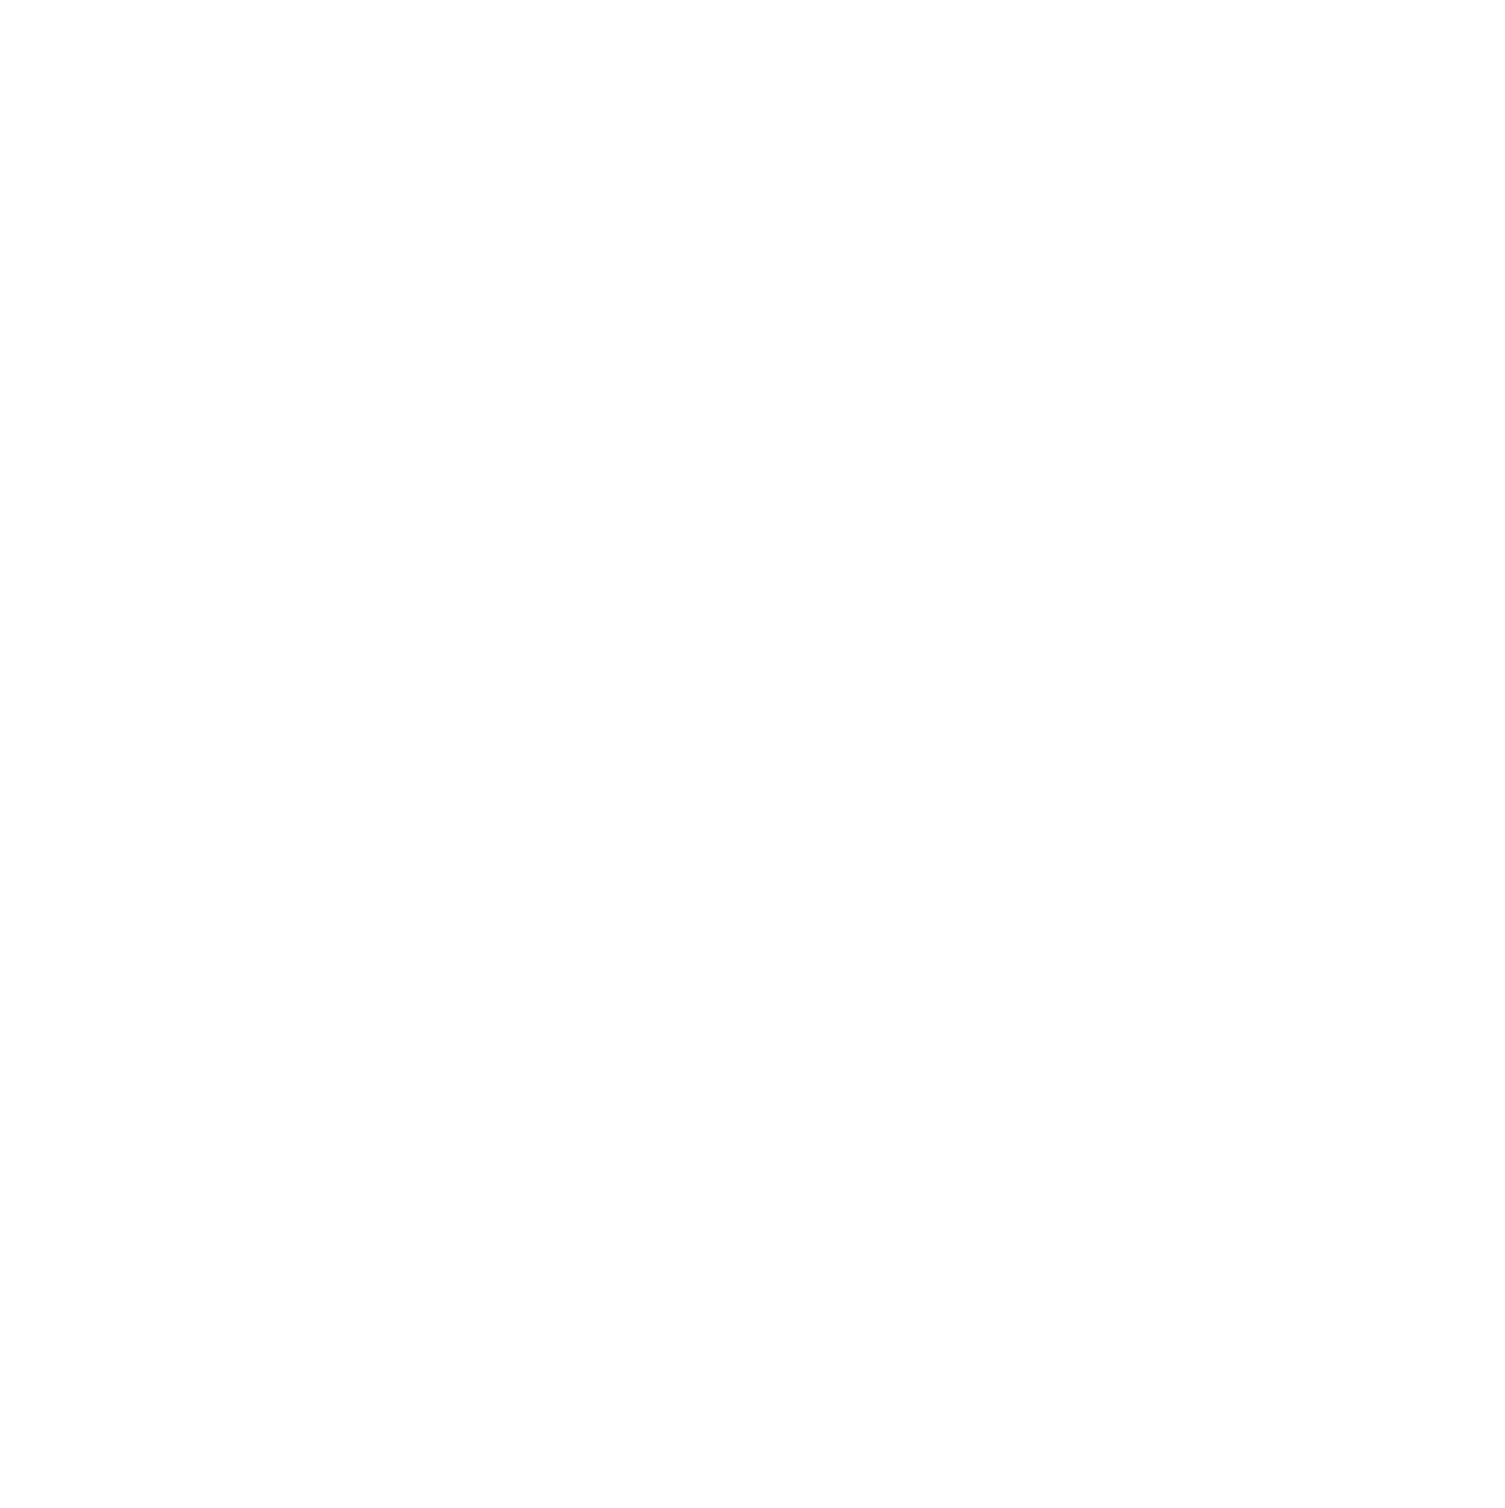 Castellum logo for dark backgrounds (transparent PNG)